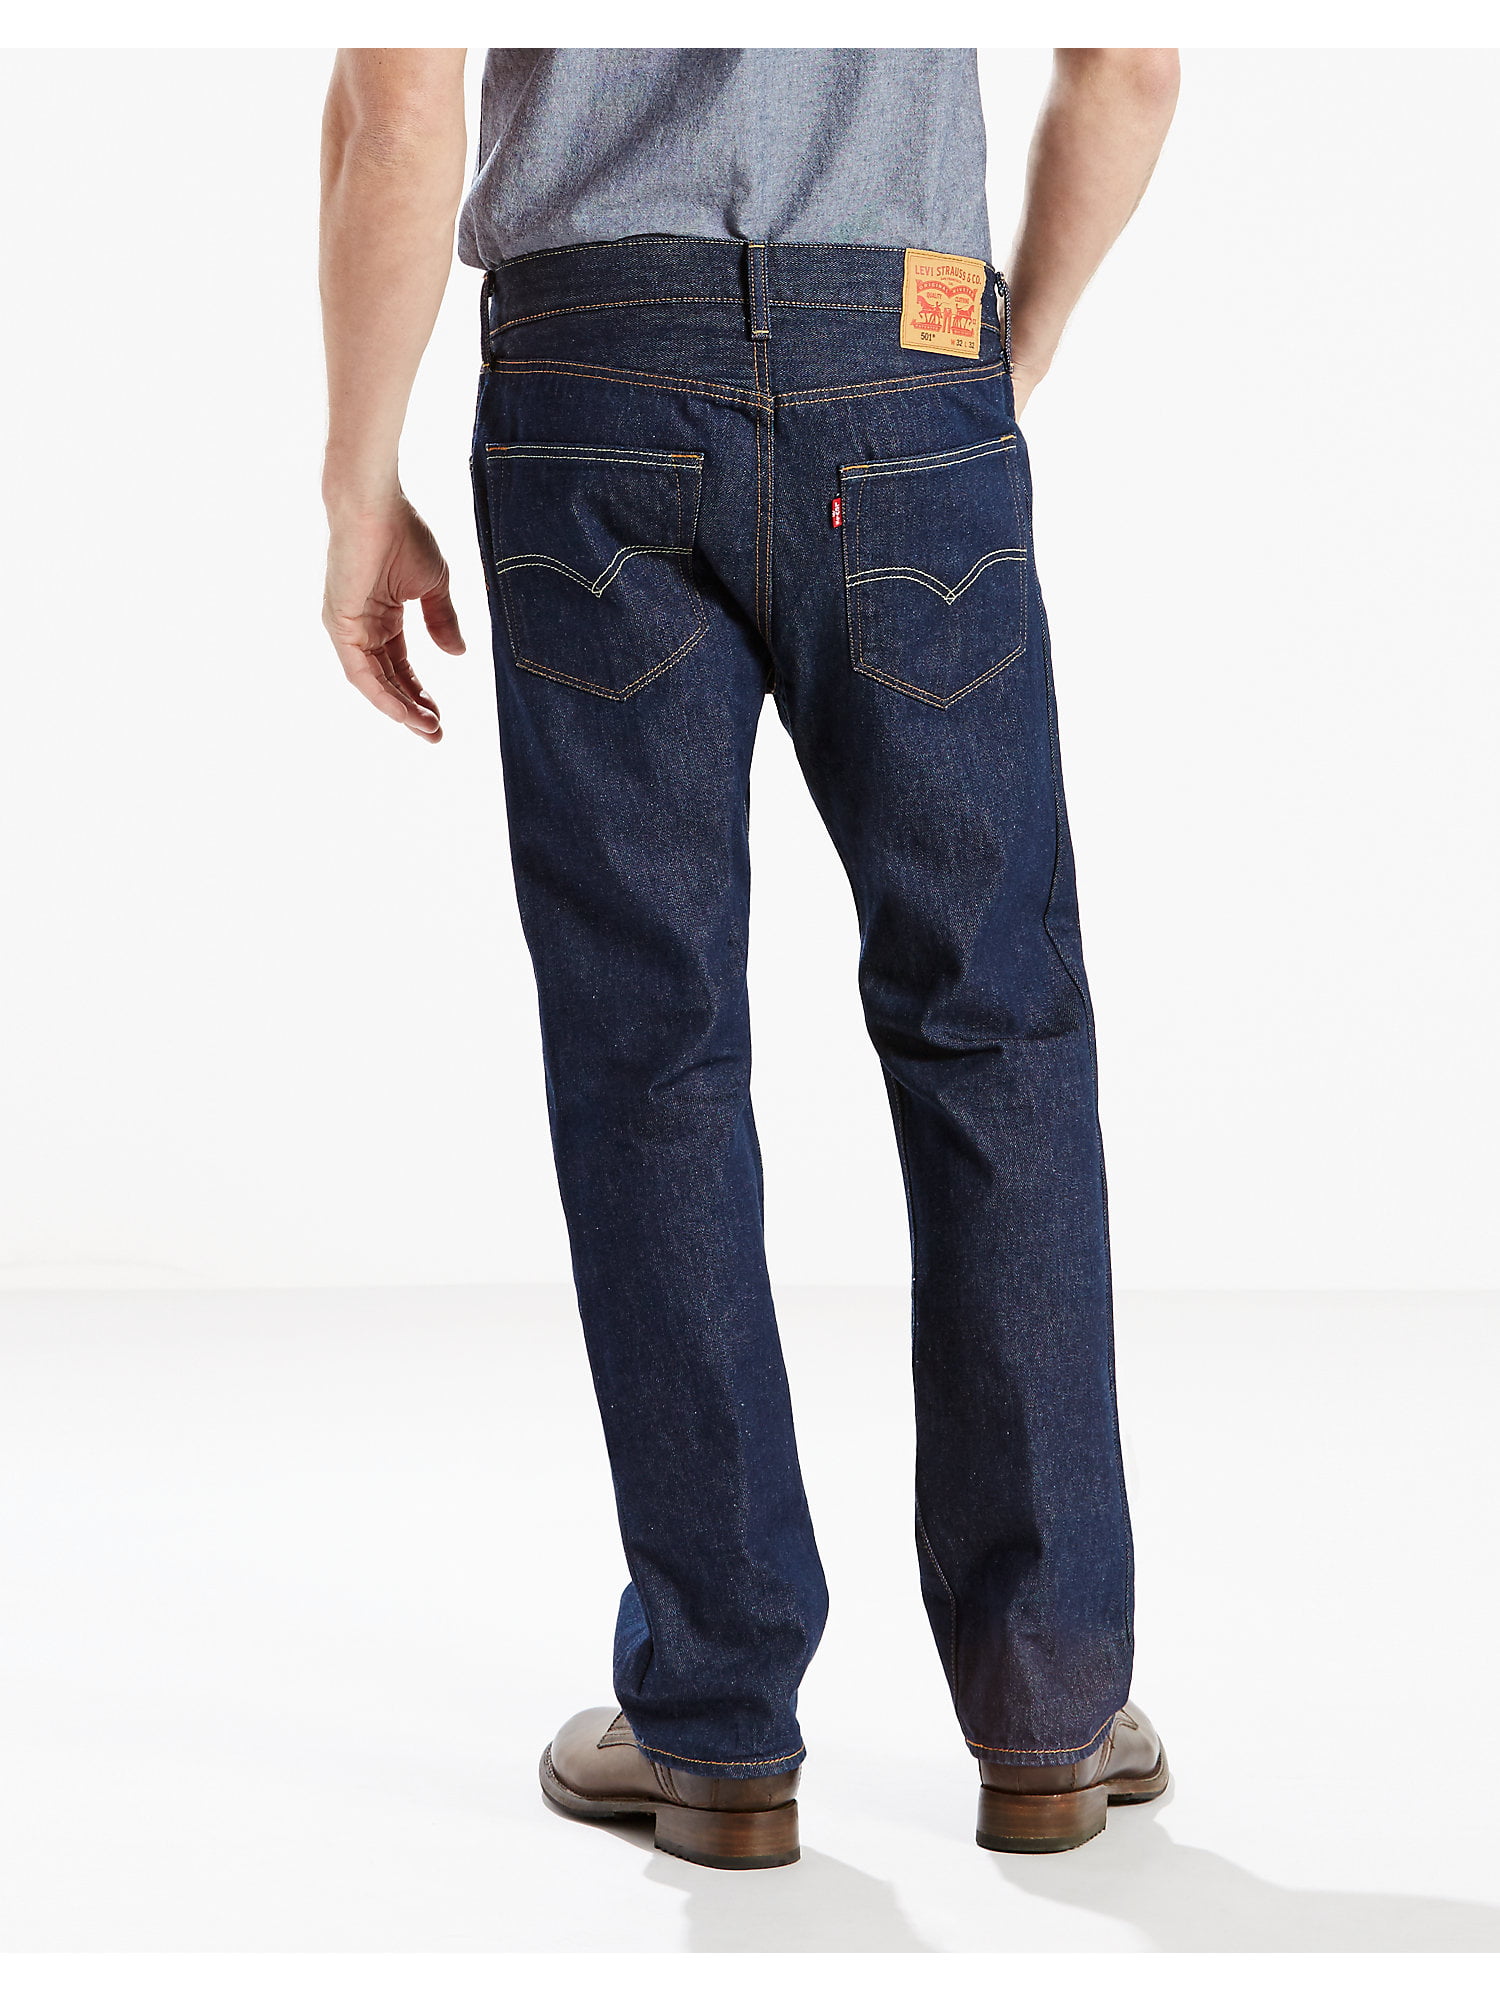 Levi's Big & Tall Original Fit Jeans - Walmart.com